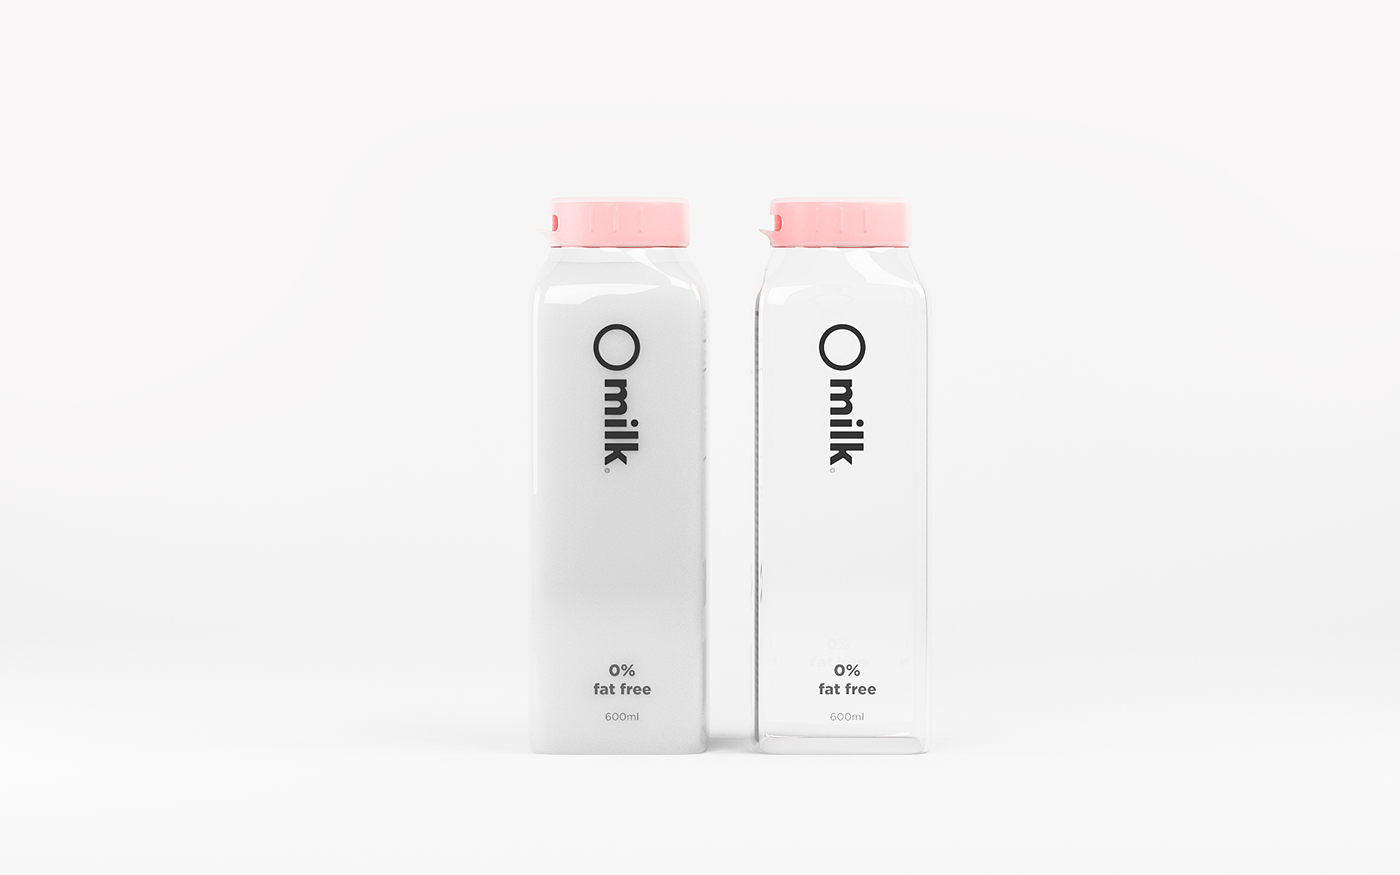 Packaging branding  logo milk packing